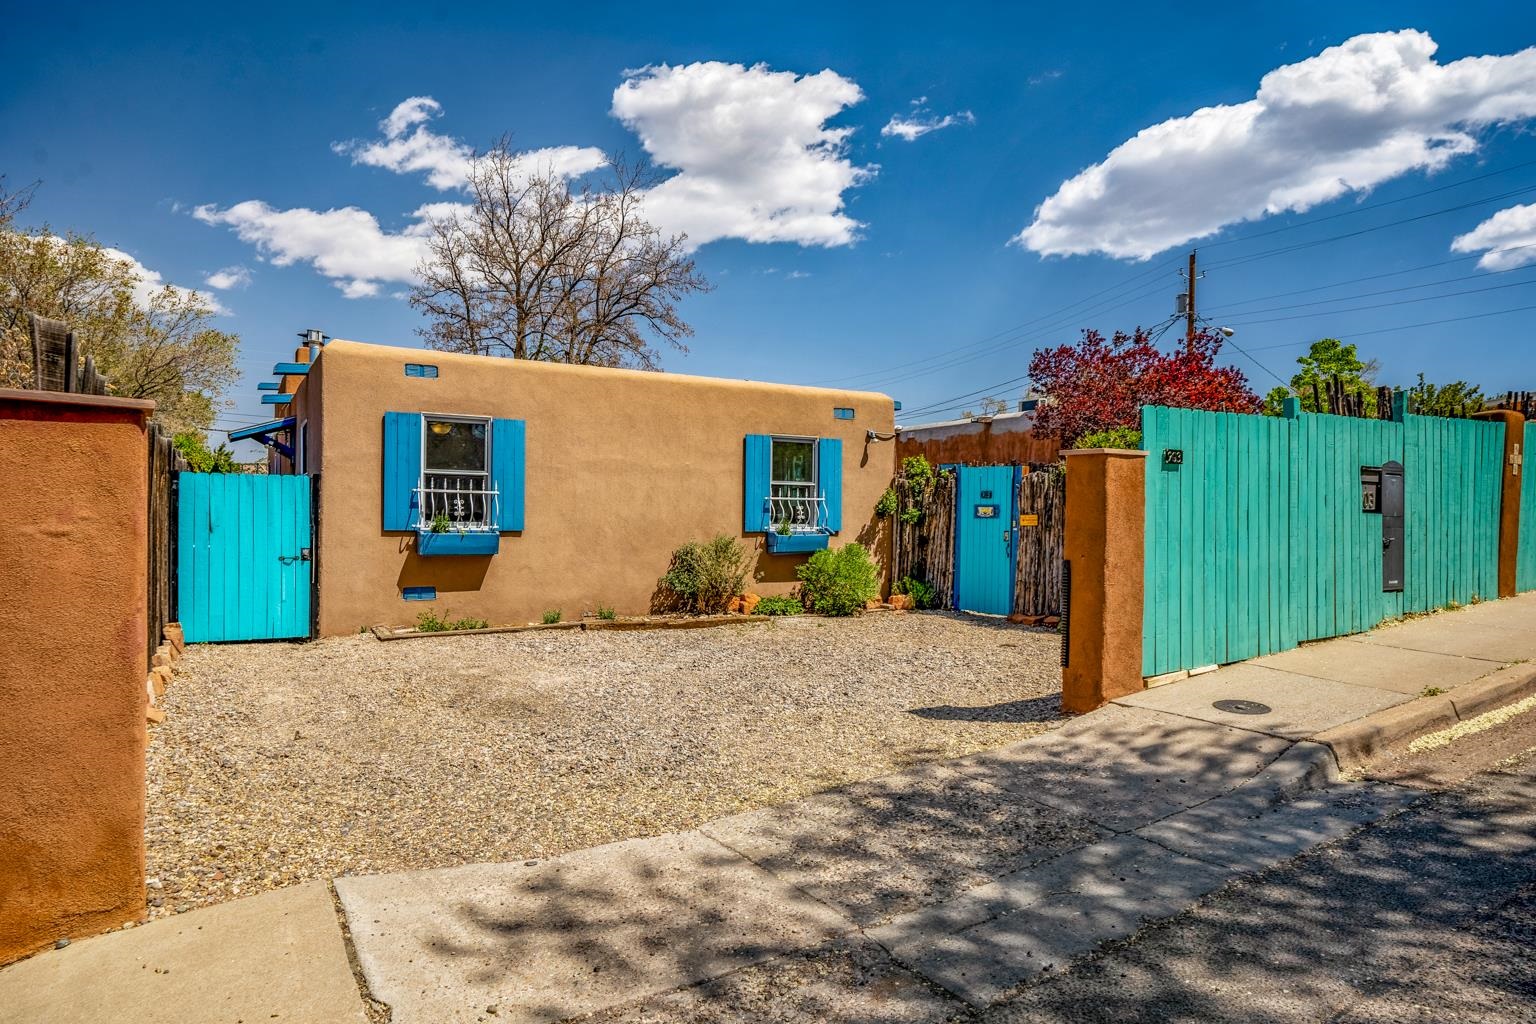 903 Don Juan, Santa Fe, New Mexico 87501, 3 Bedrooms Bedrooms, ,2 BathroomsBathrooms,Residential,For Sale,903 Don Juan,202201554